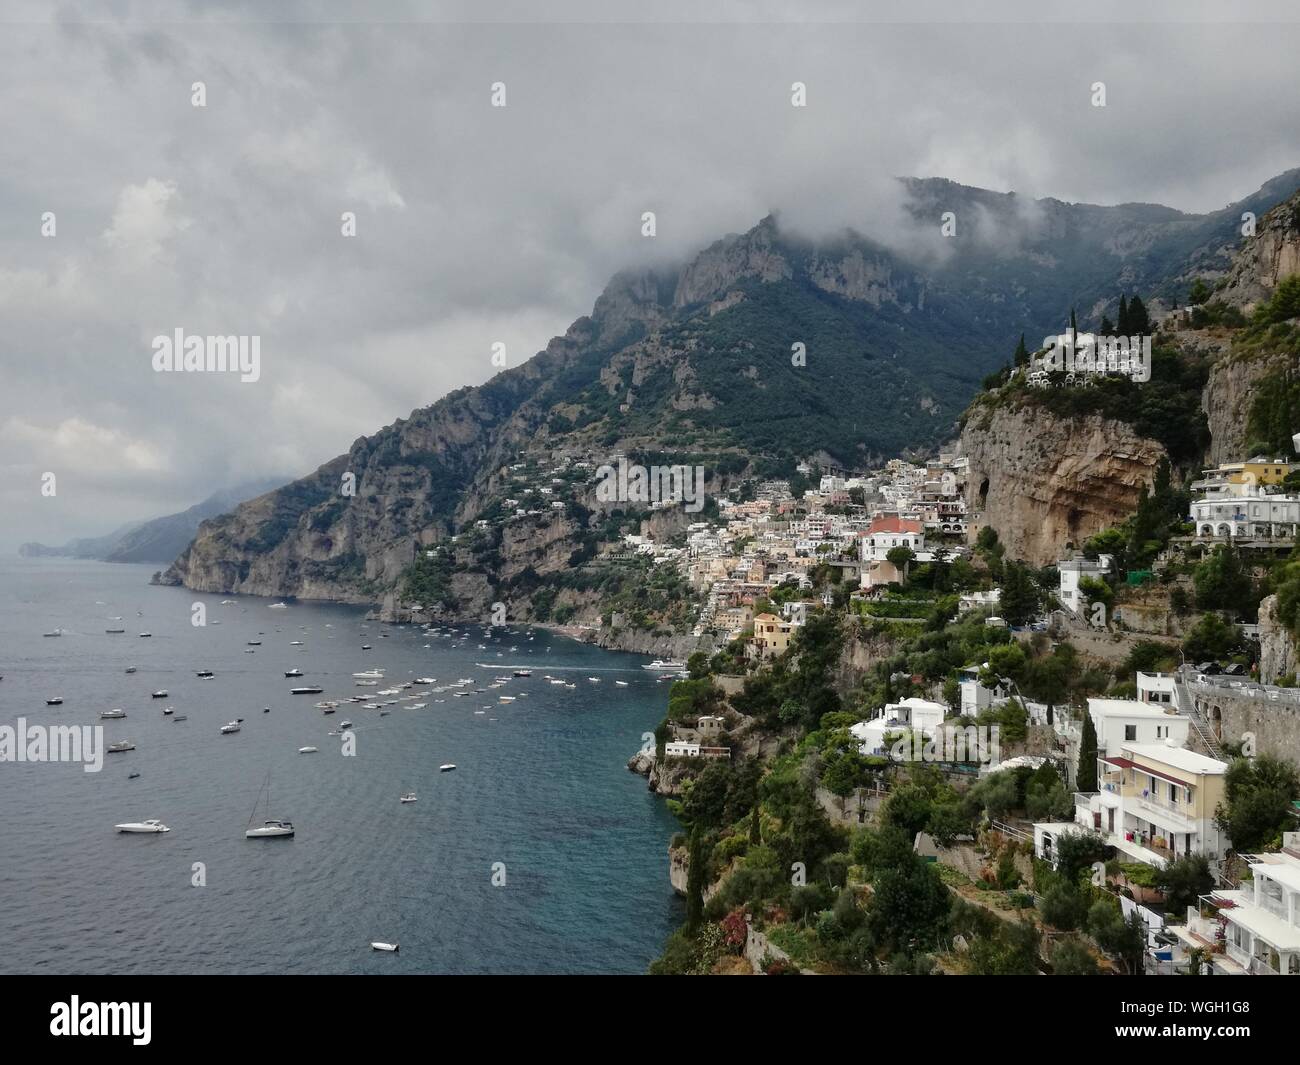 High Angle View Of Town On Italian Coastline Stock Photo